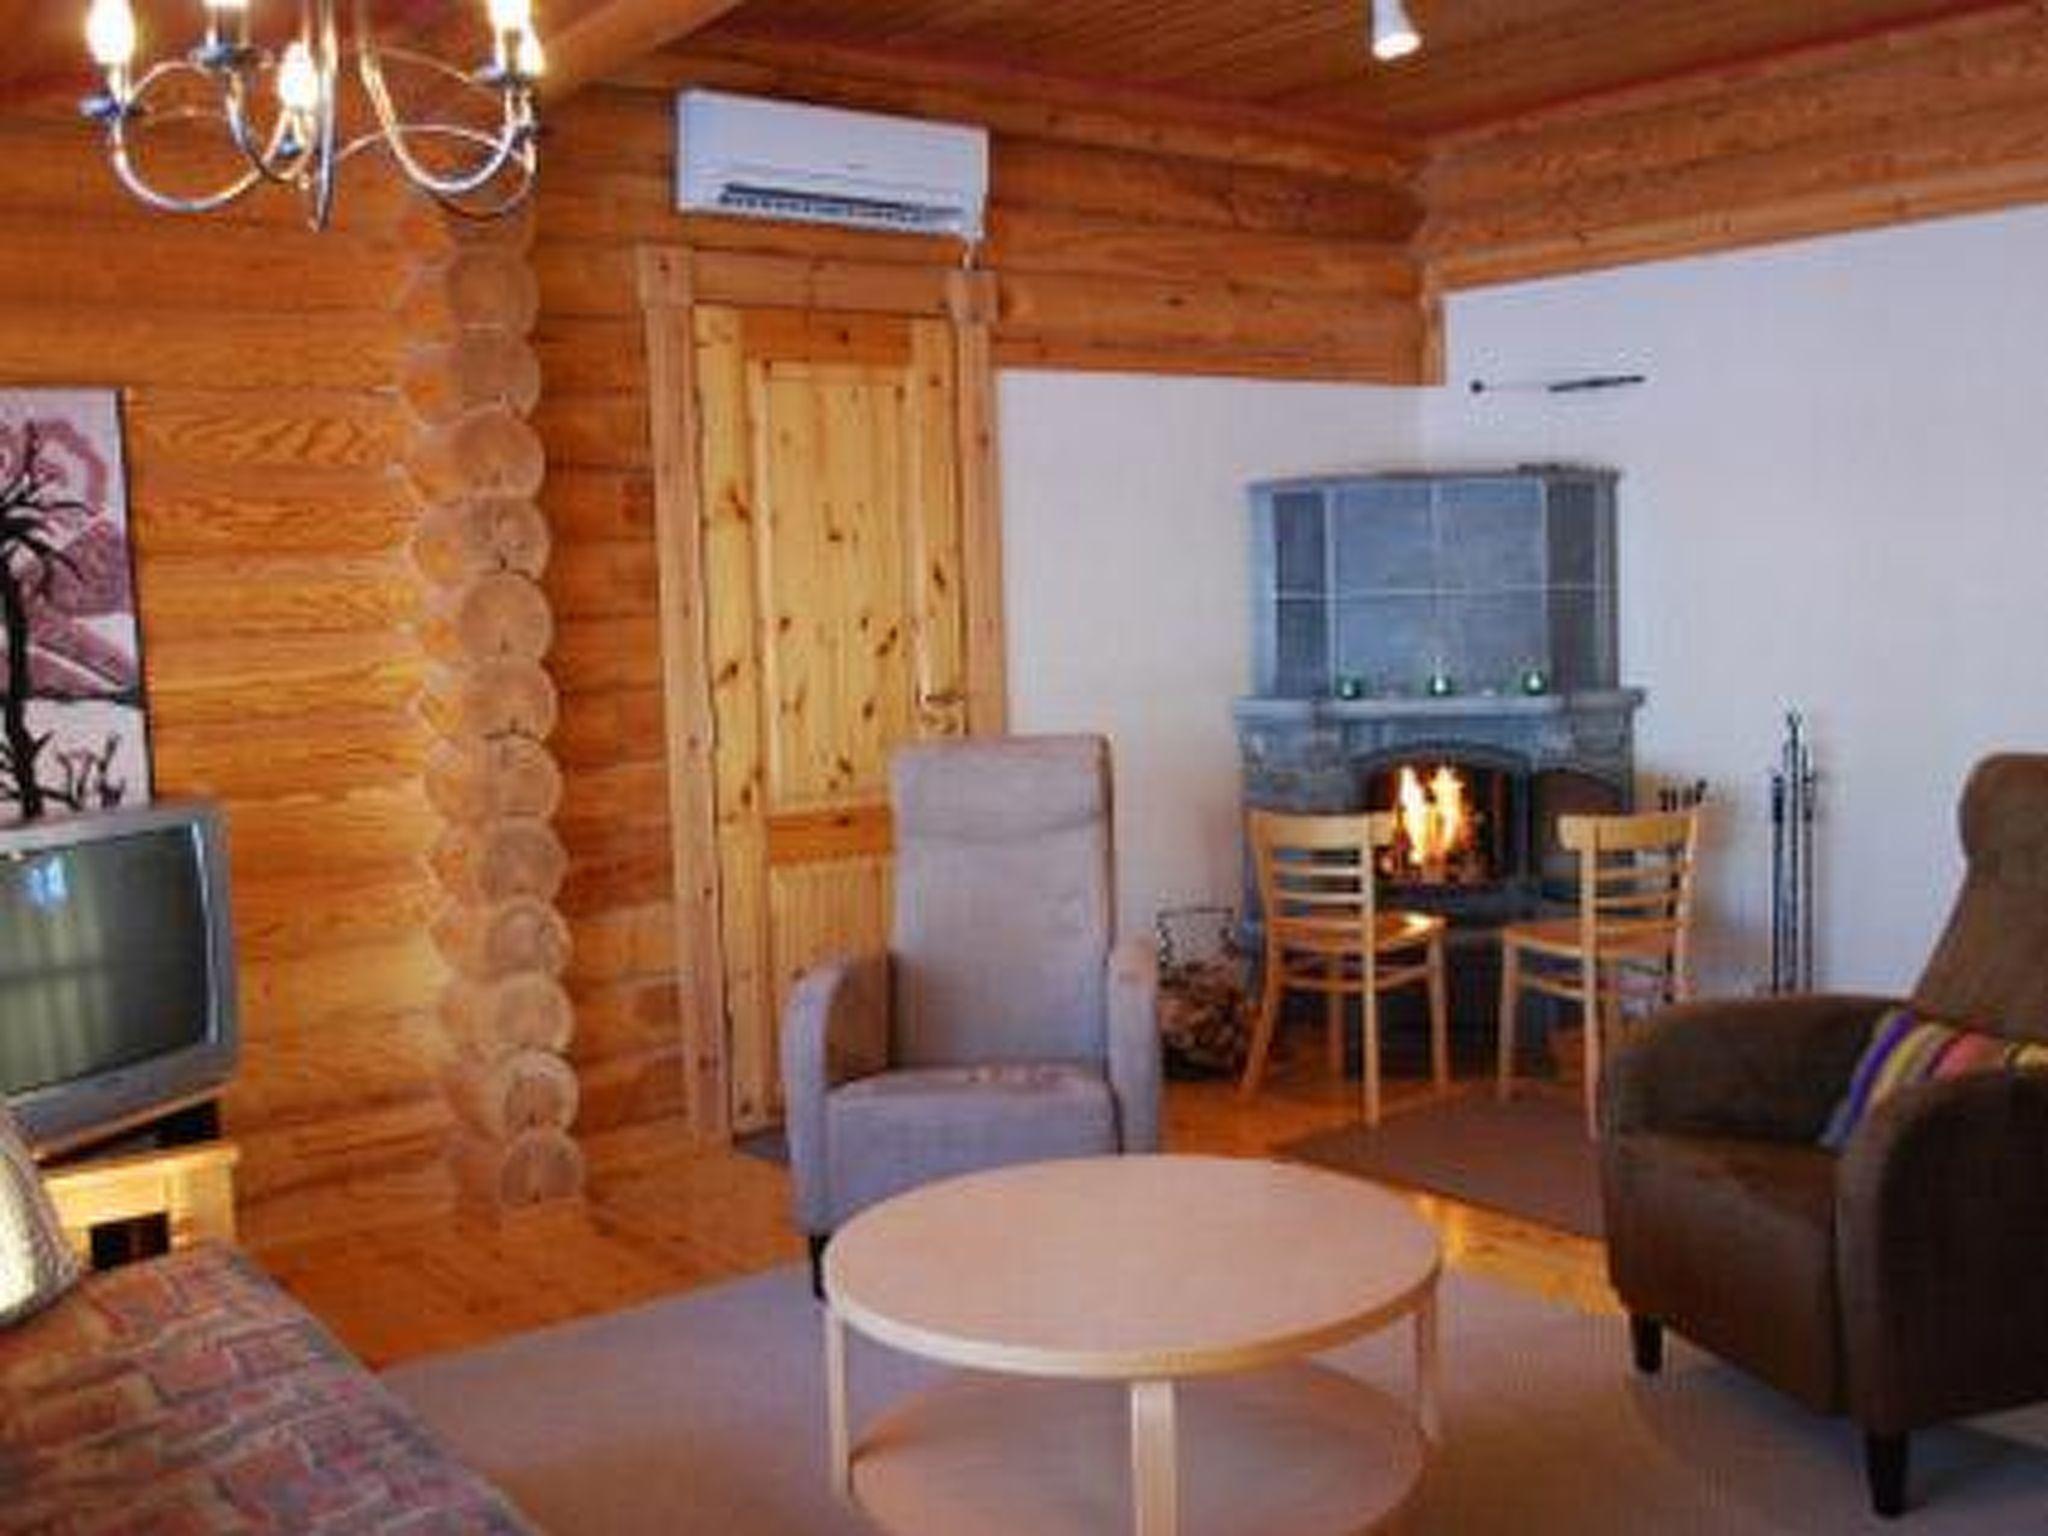 Photo 3 - 2 bedroom House in Sonkajärvi with sauna